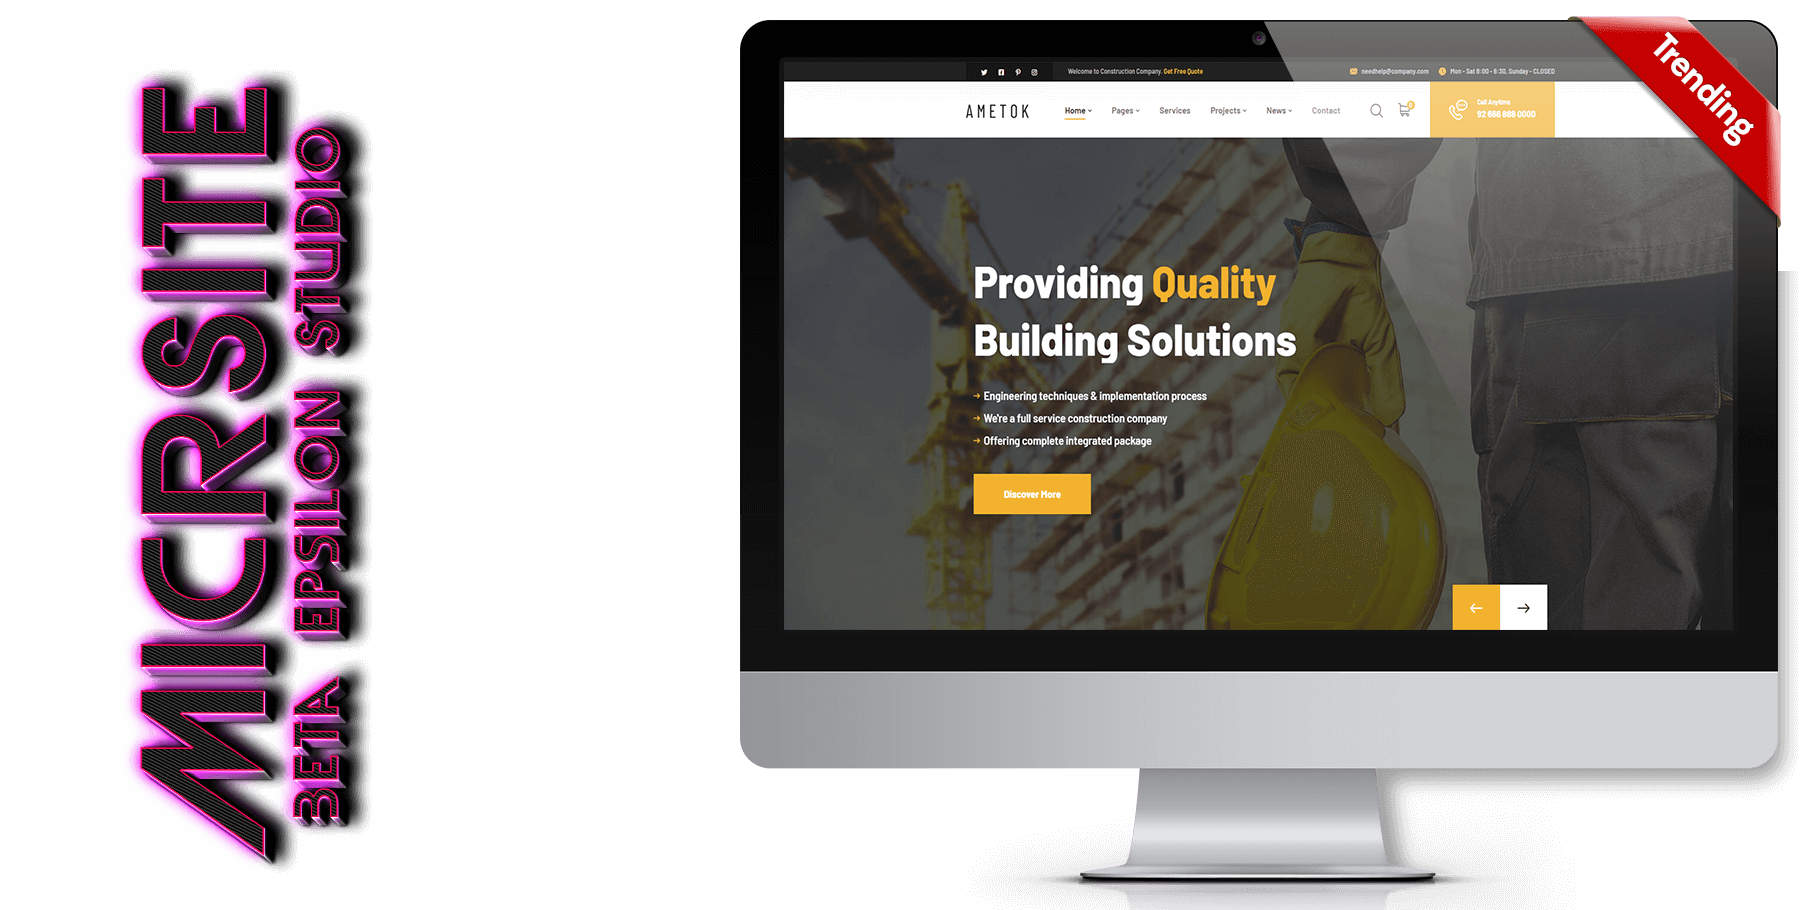 A website design in construction named Ametok